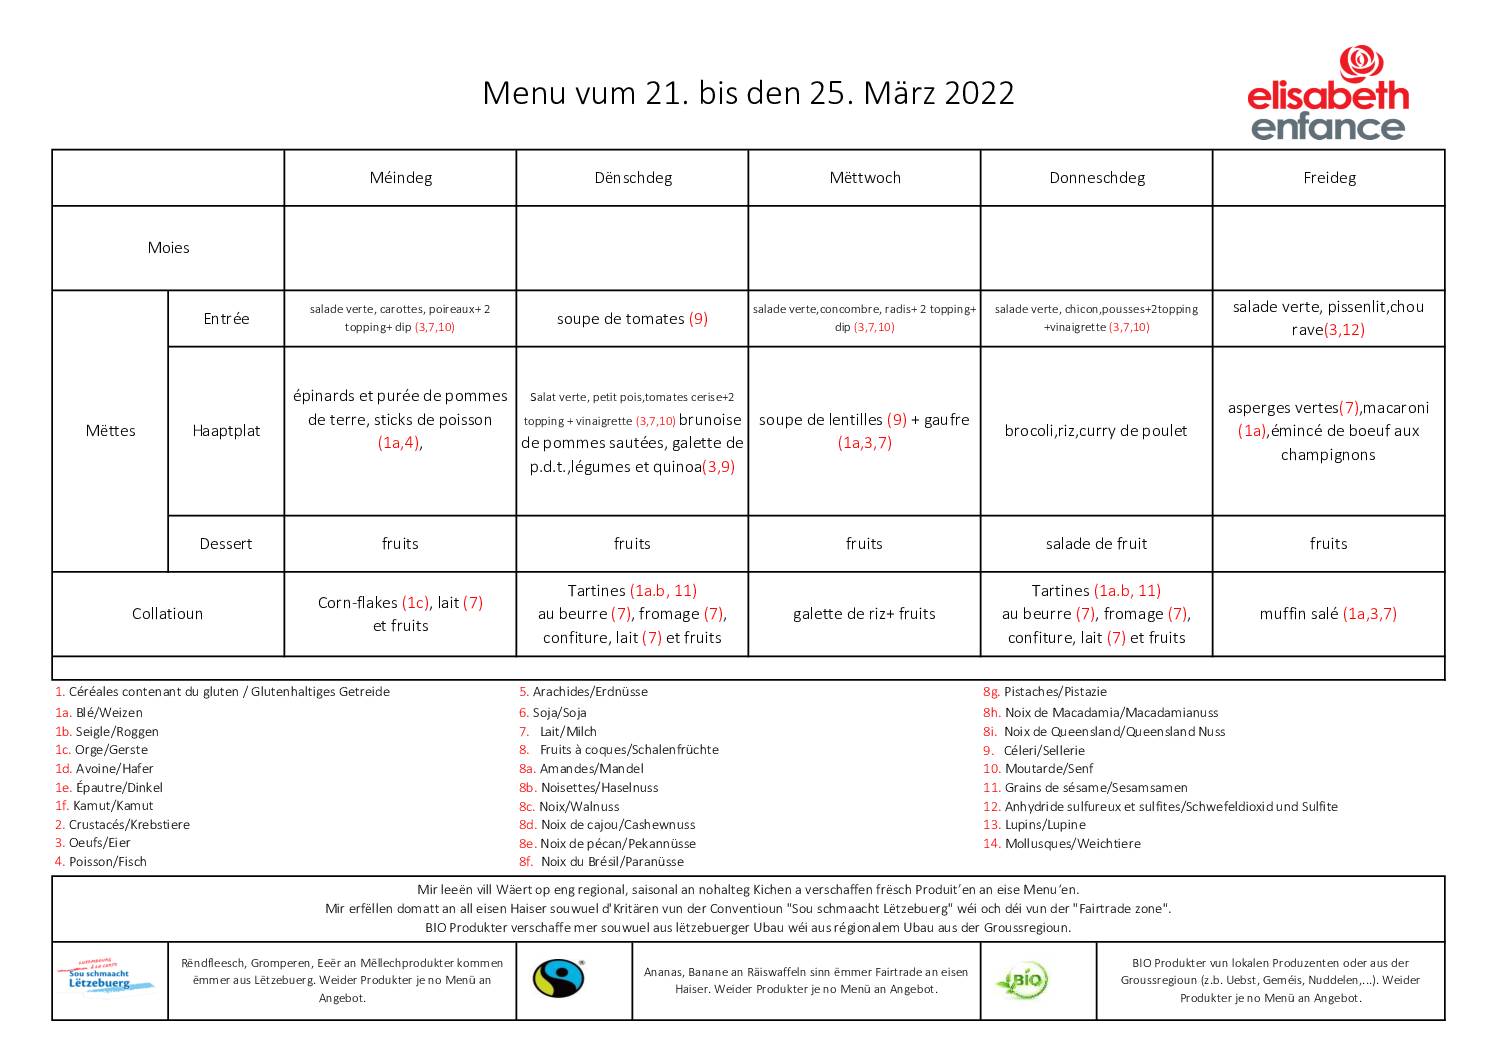 Menus de la semaine du 21 mars 2022 au 25 mars 2022